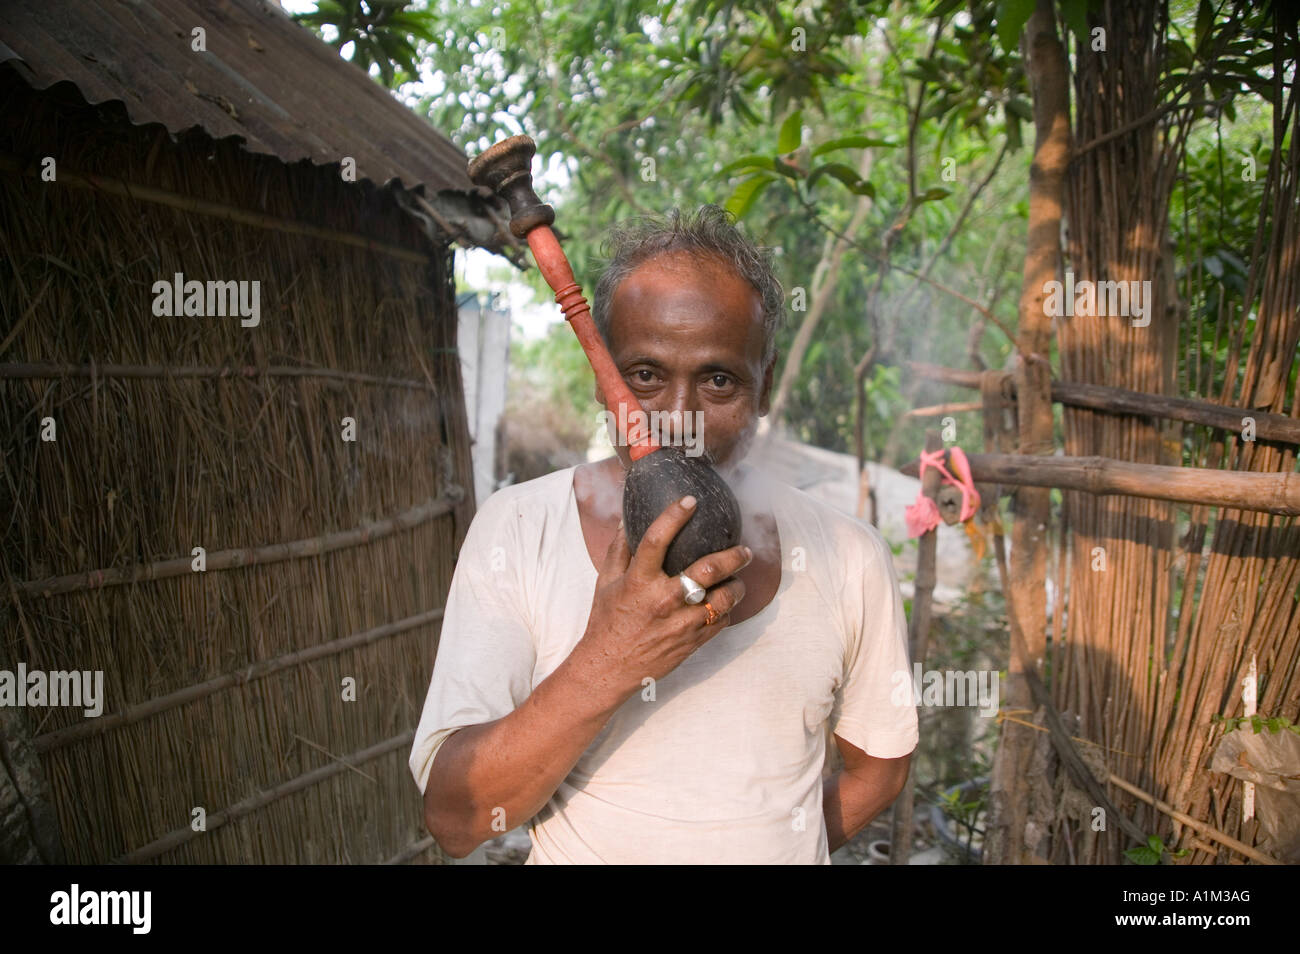 Man smoking from a homemade pipe in rural Bangladesh Stock Photo